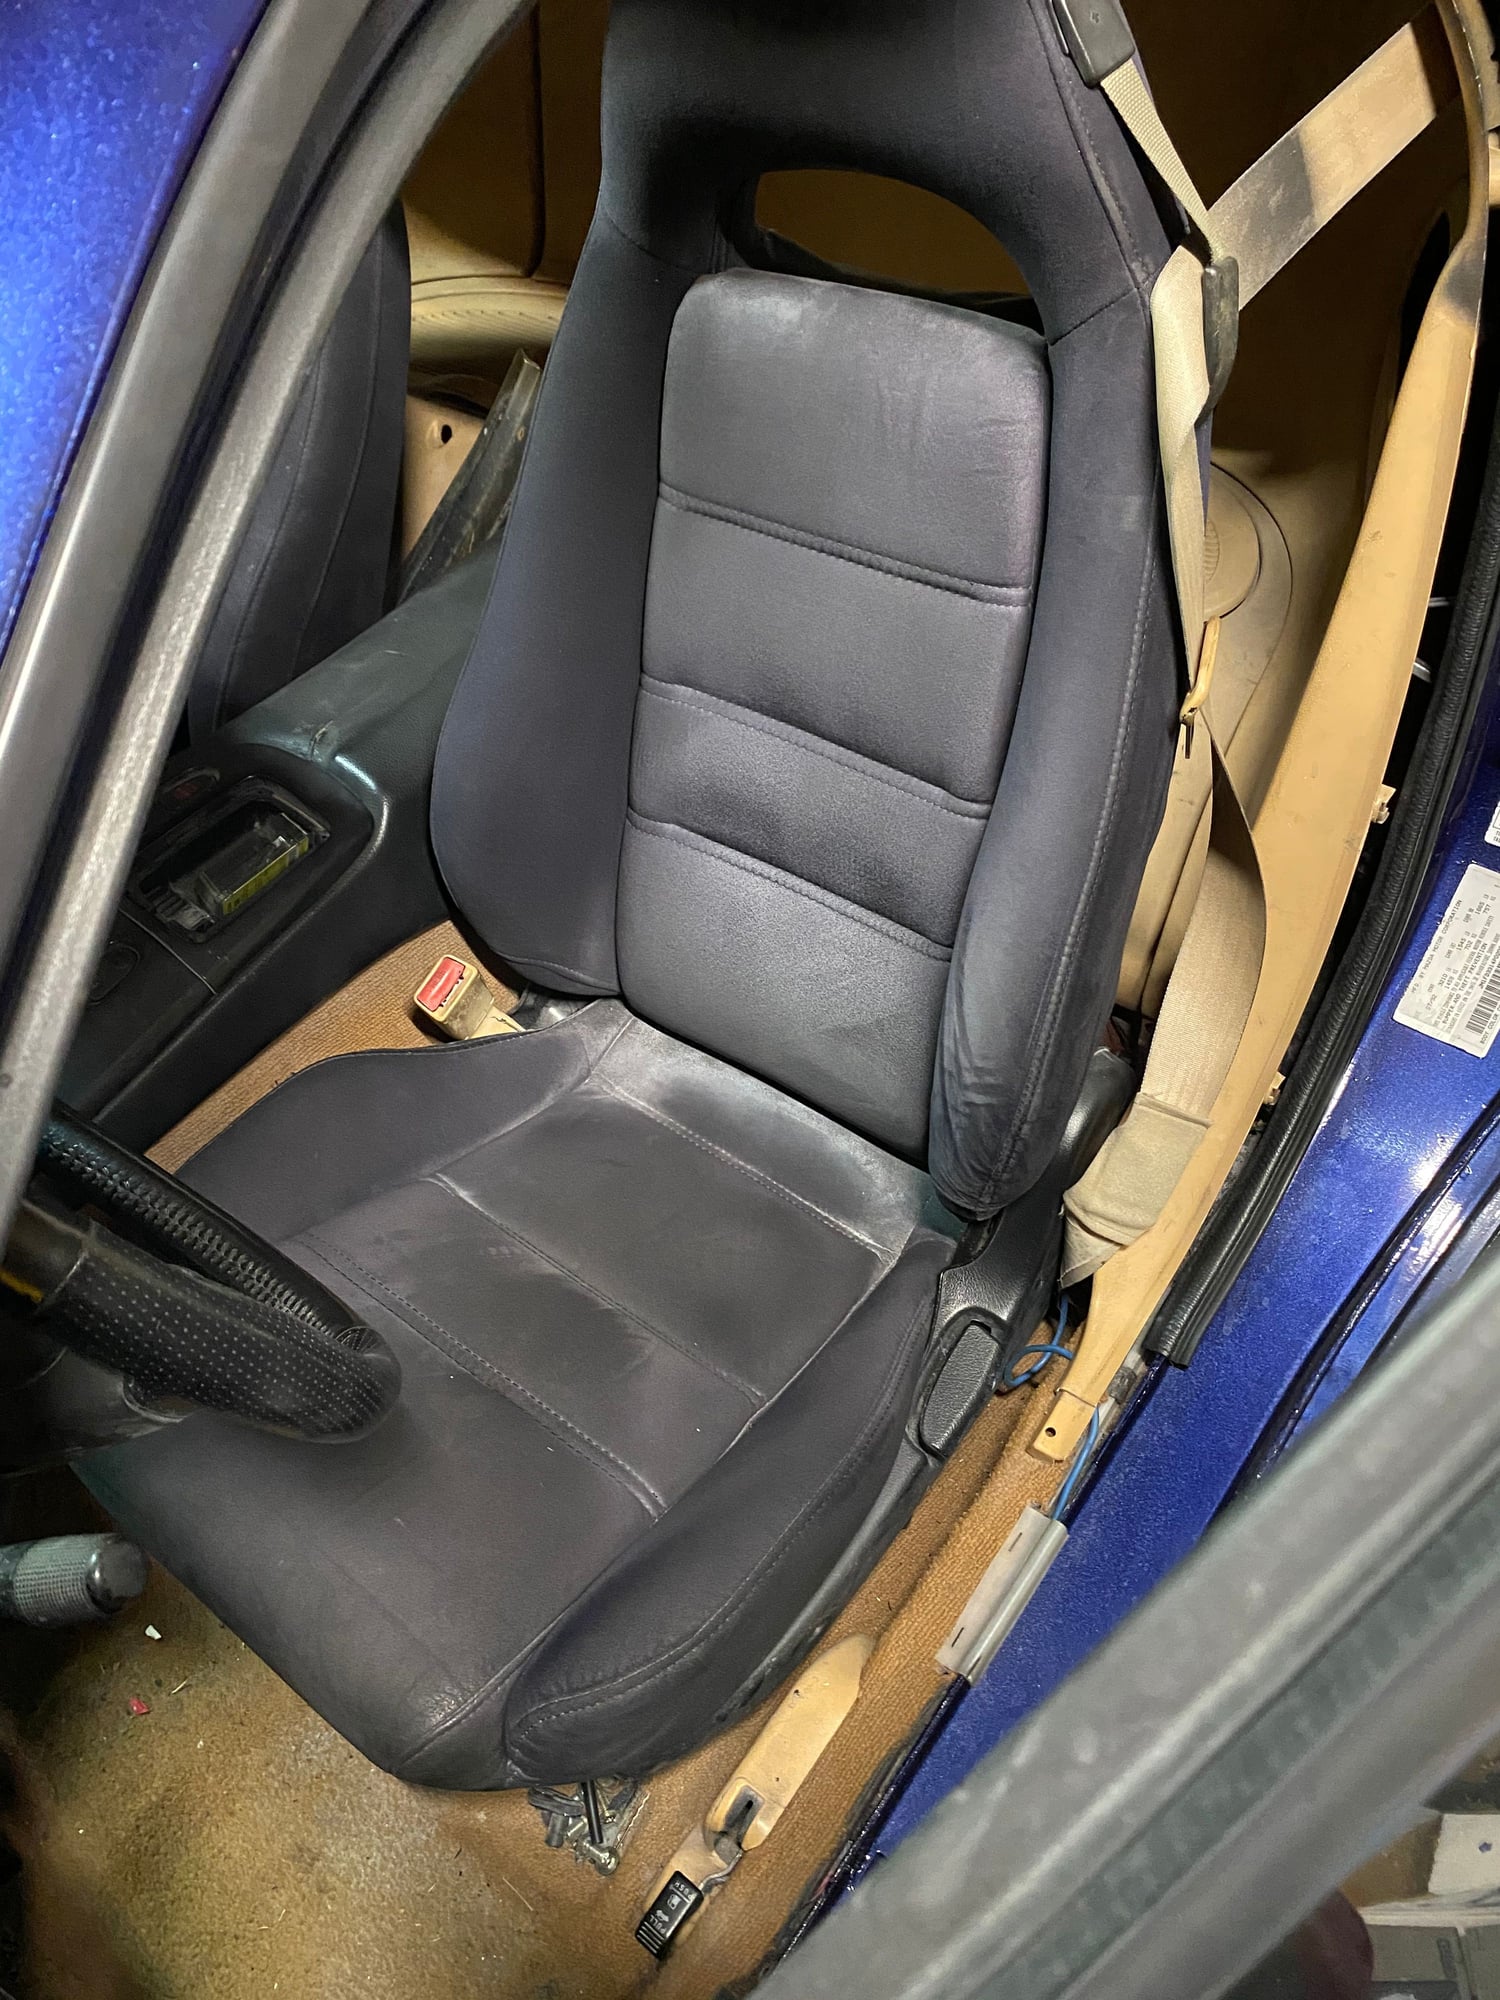 Interior/Upholstery - R1 seats - Used - 1993 to 2002 Mazda RX-7 - San Antonio, TX 78233, United States